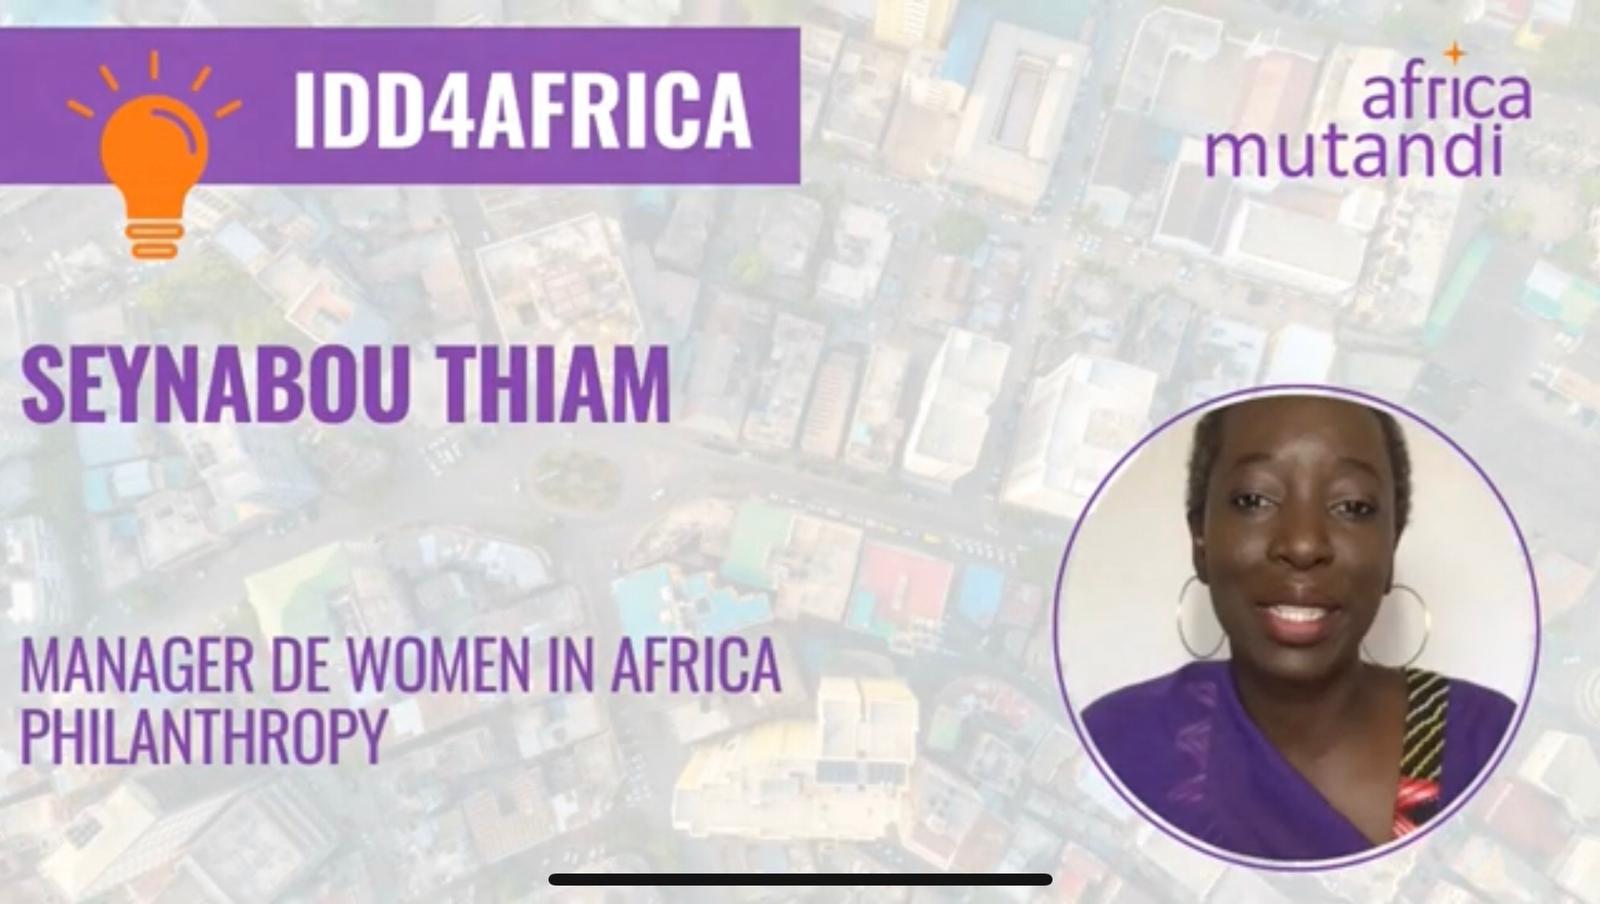 #IDD4AFRICA 4 Seynabou Thiam, Manager de Women in Africa Philanthropy.